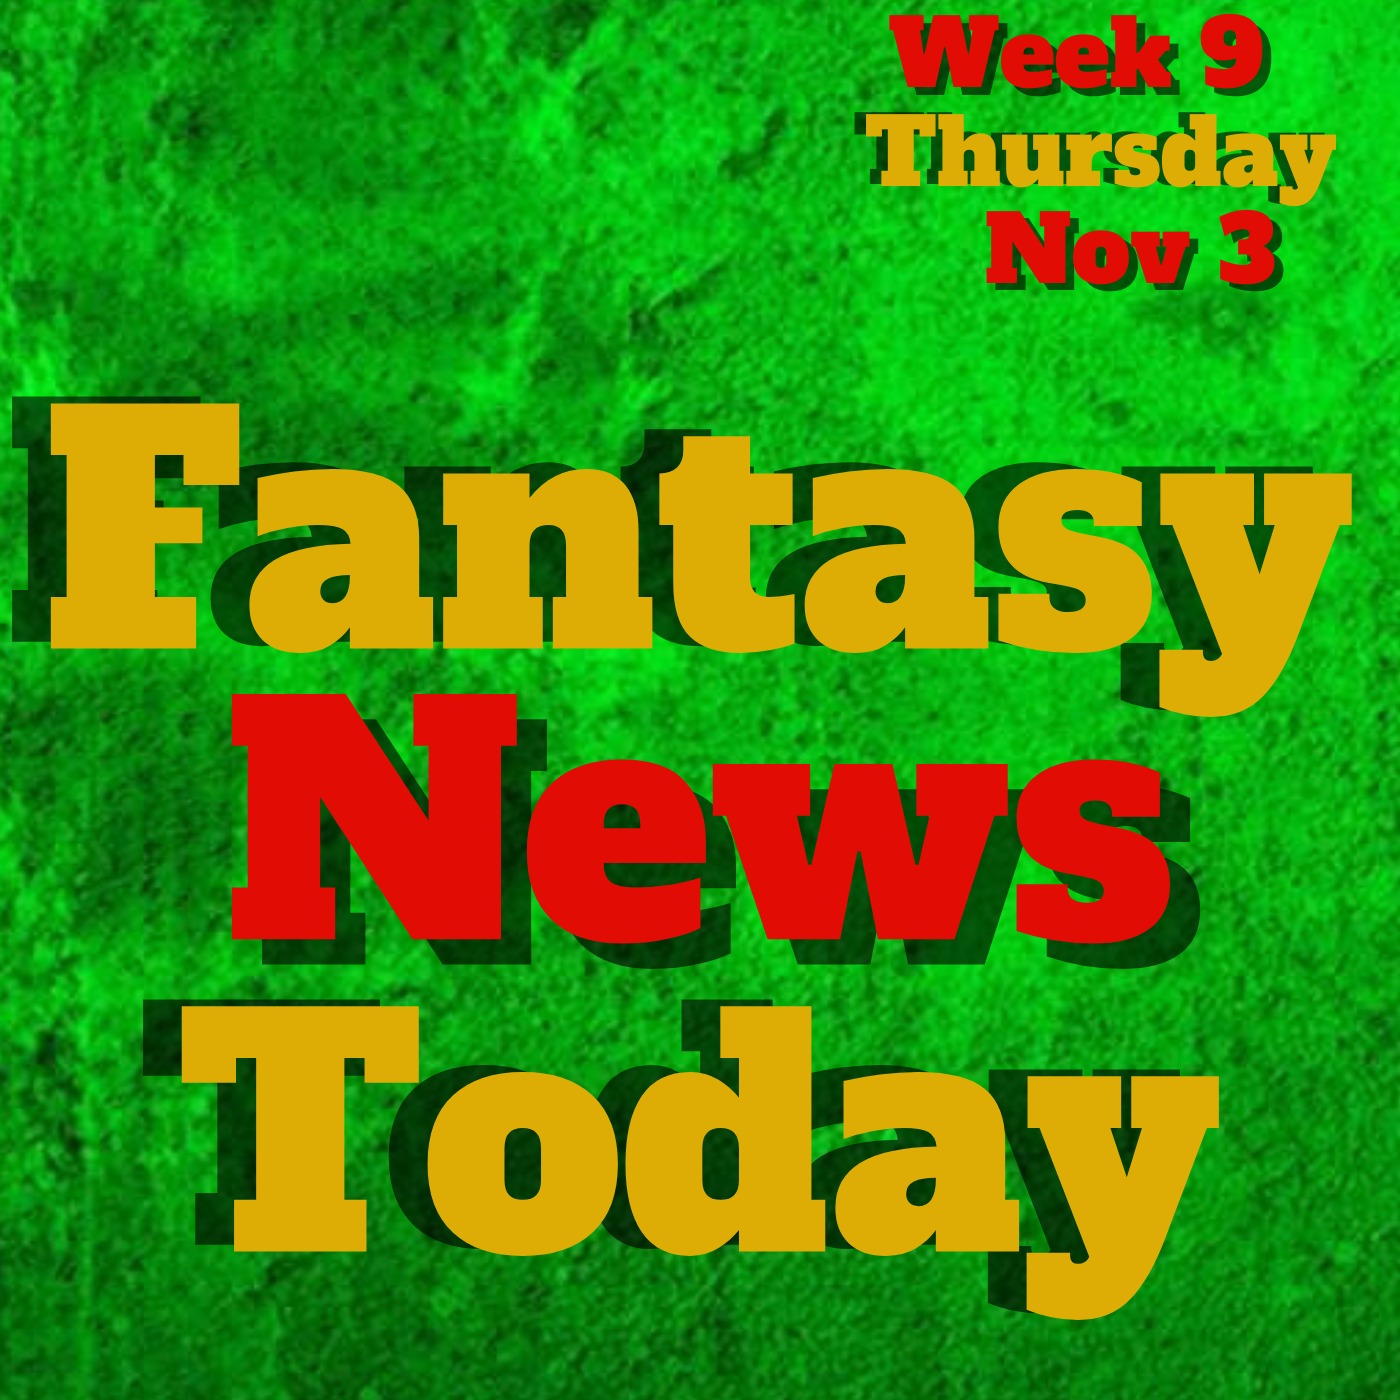 Fantasy Football News Today LIVE | Thursday November 3rd 2022